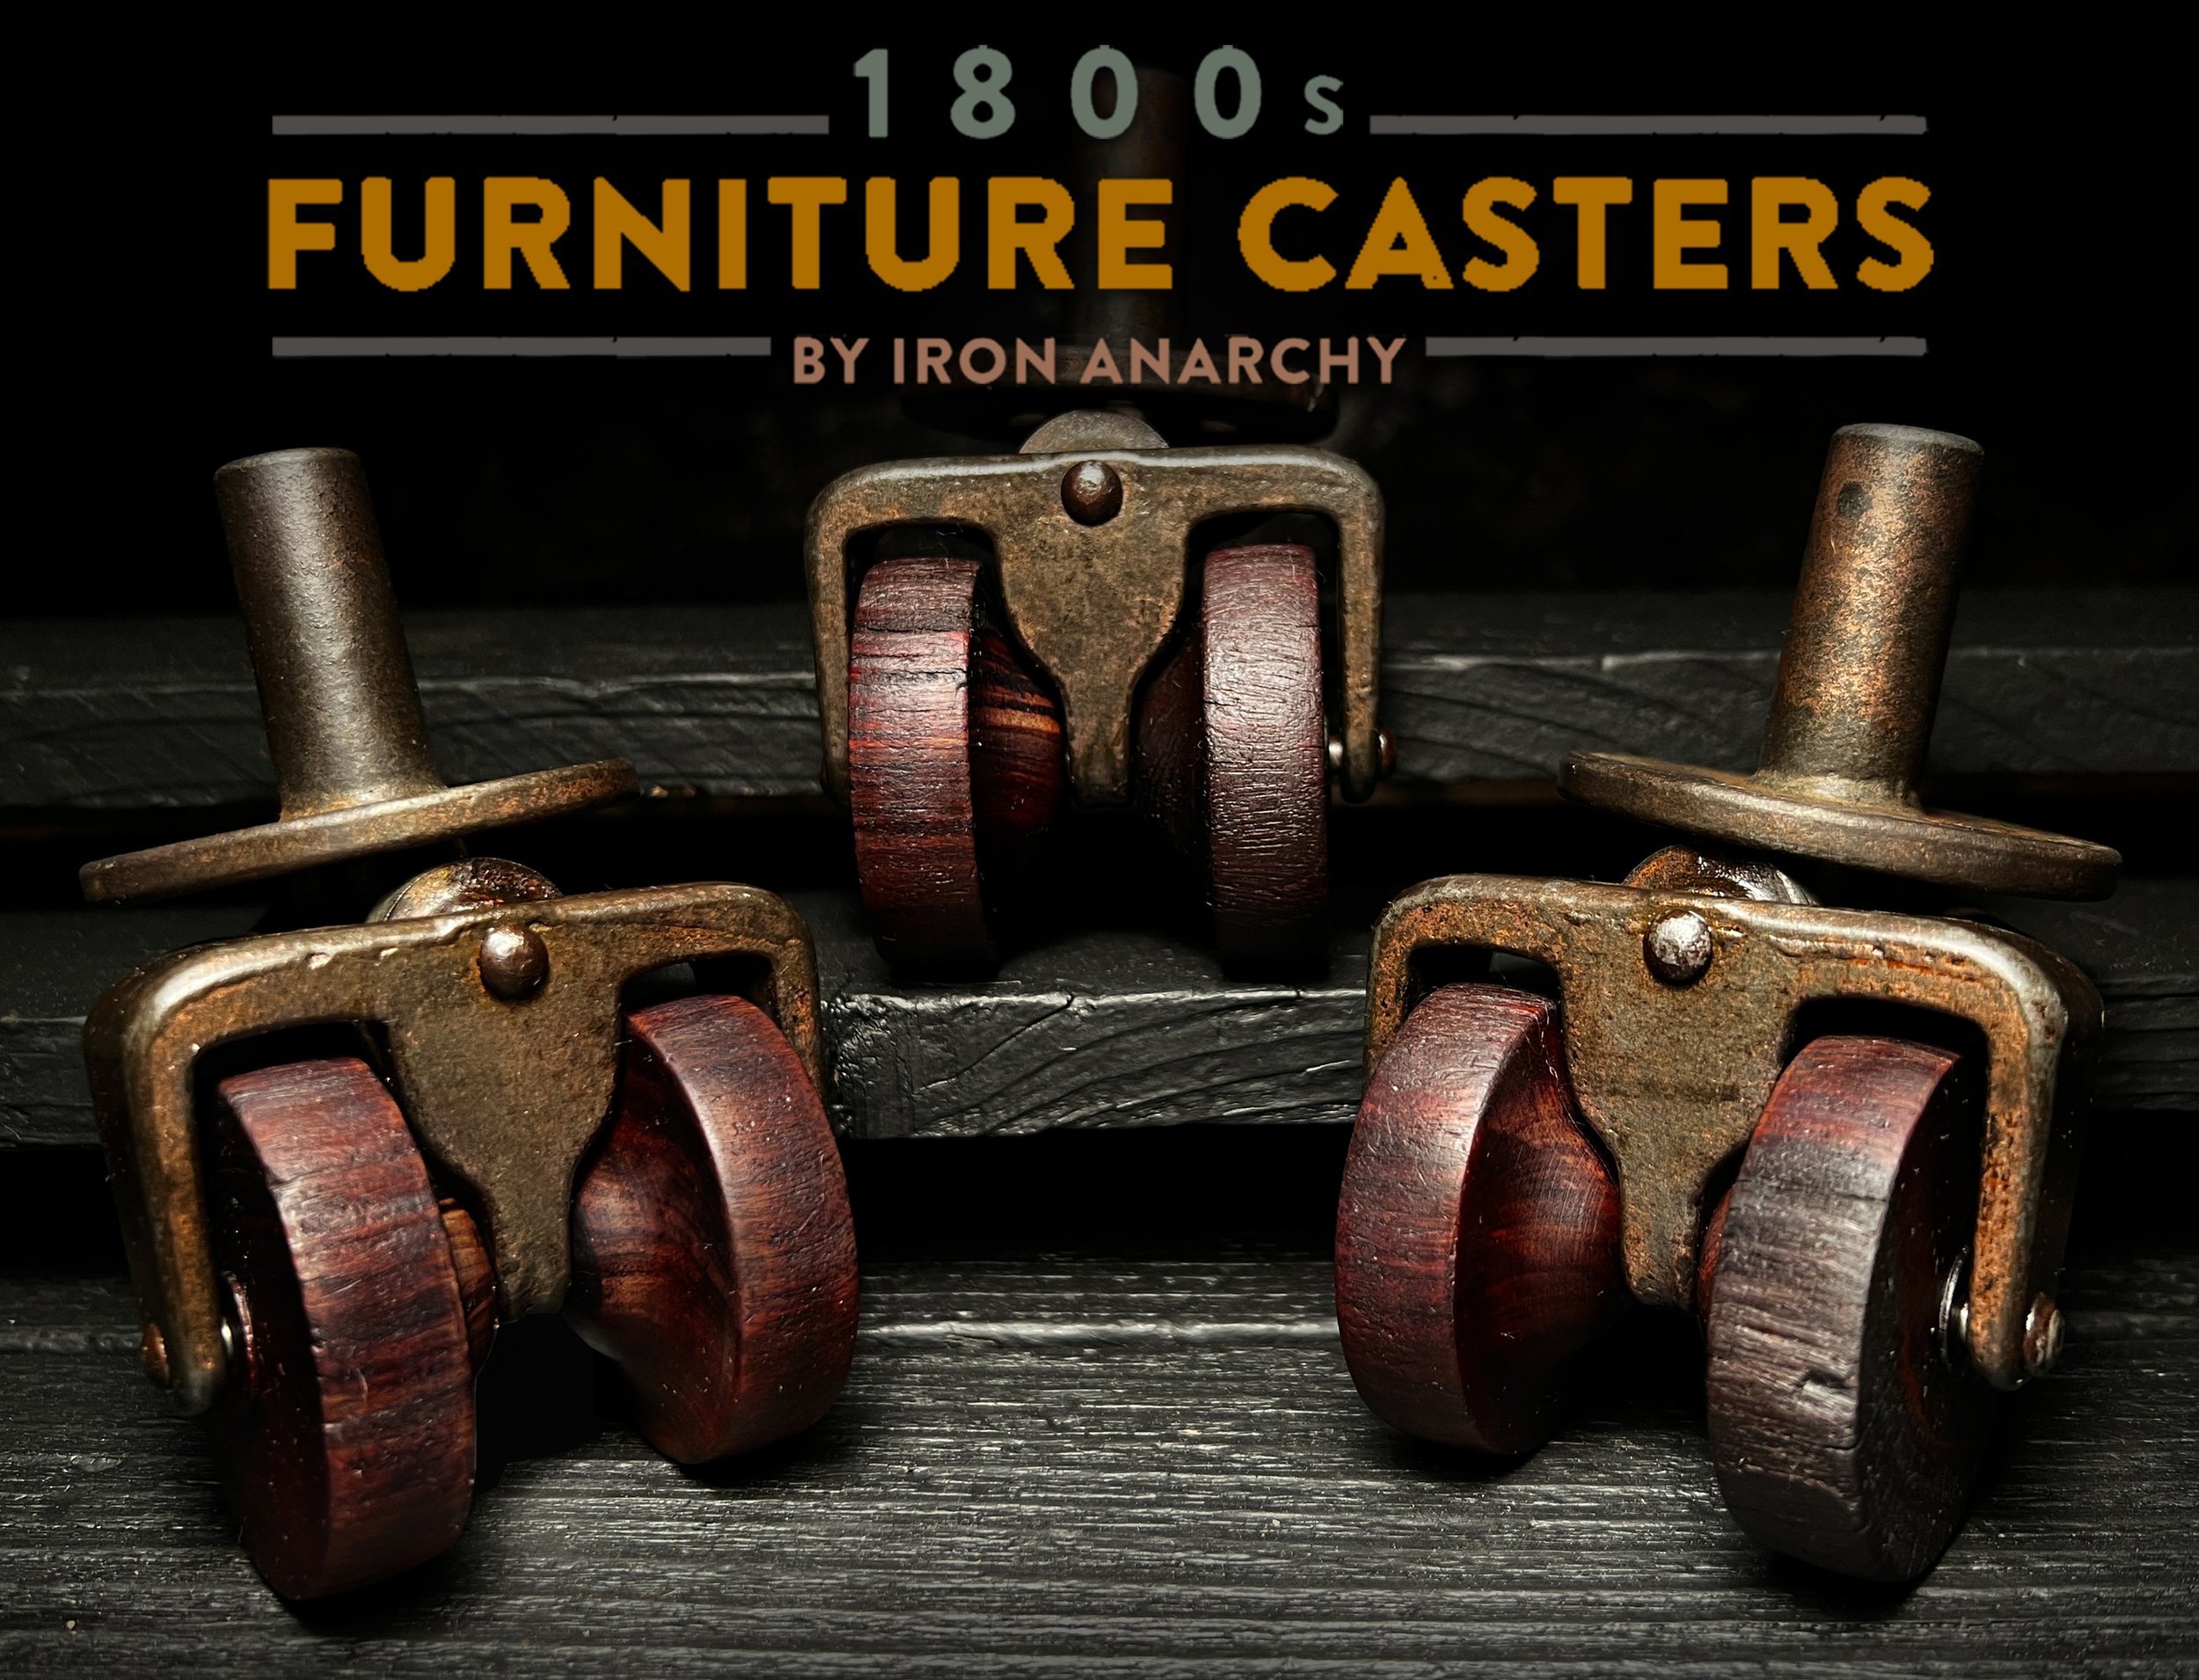 Antique Furniture Casters, Vintage Furniture Casters